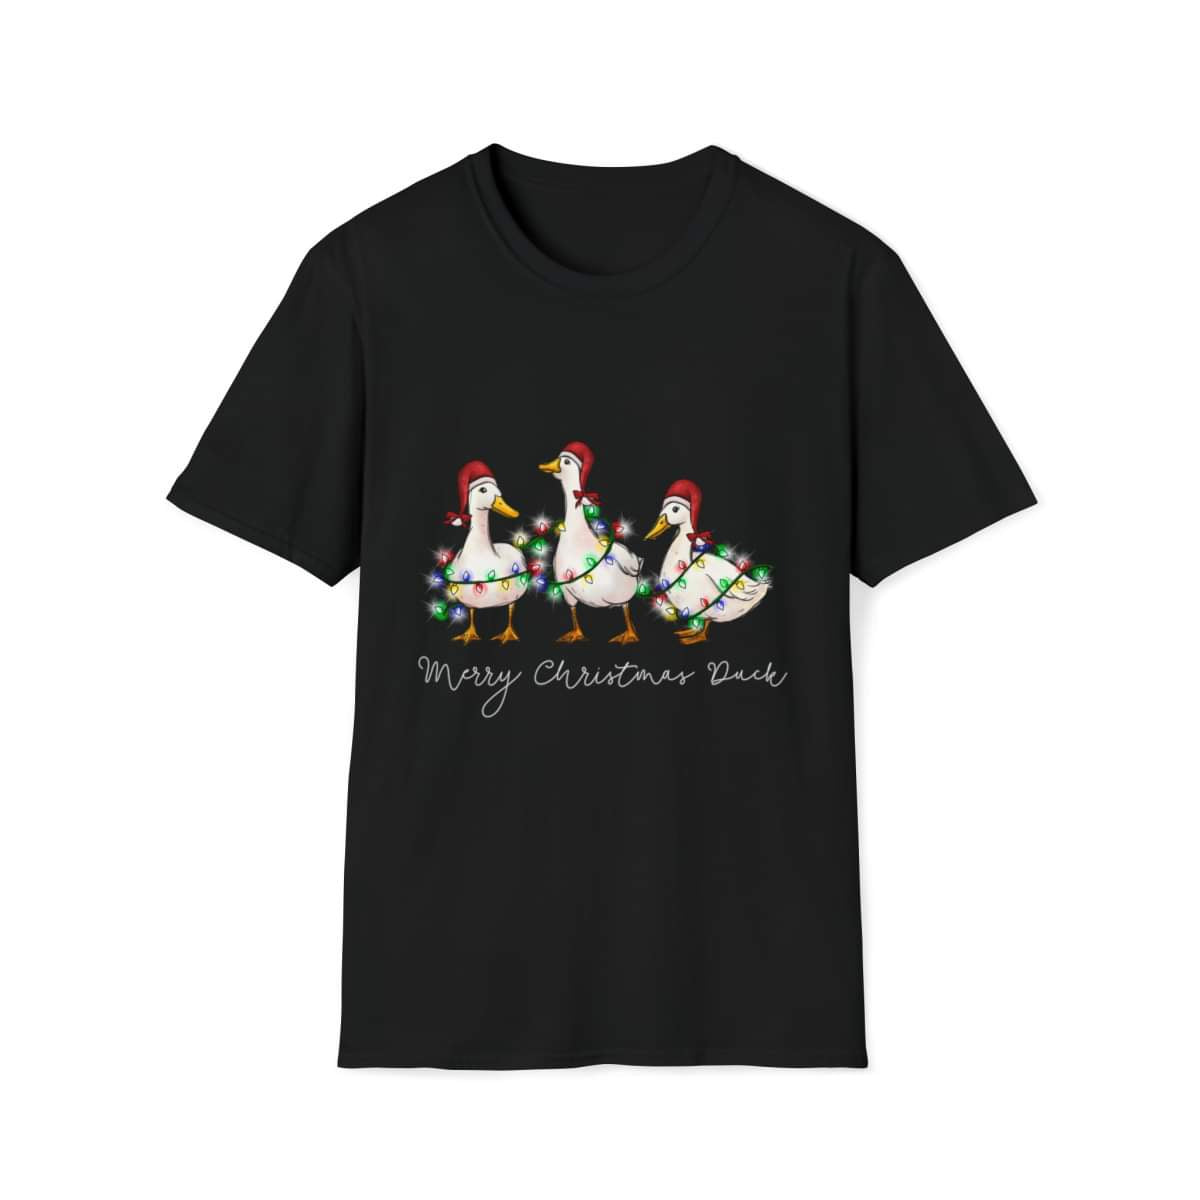 “Merry Christmas Duck” T-Shirt